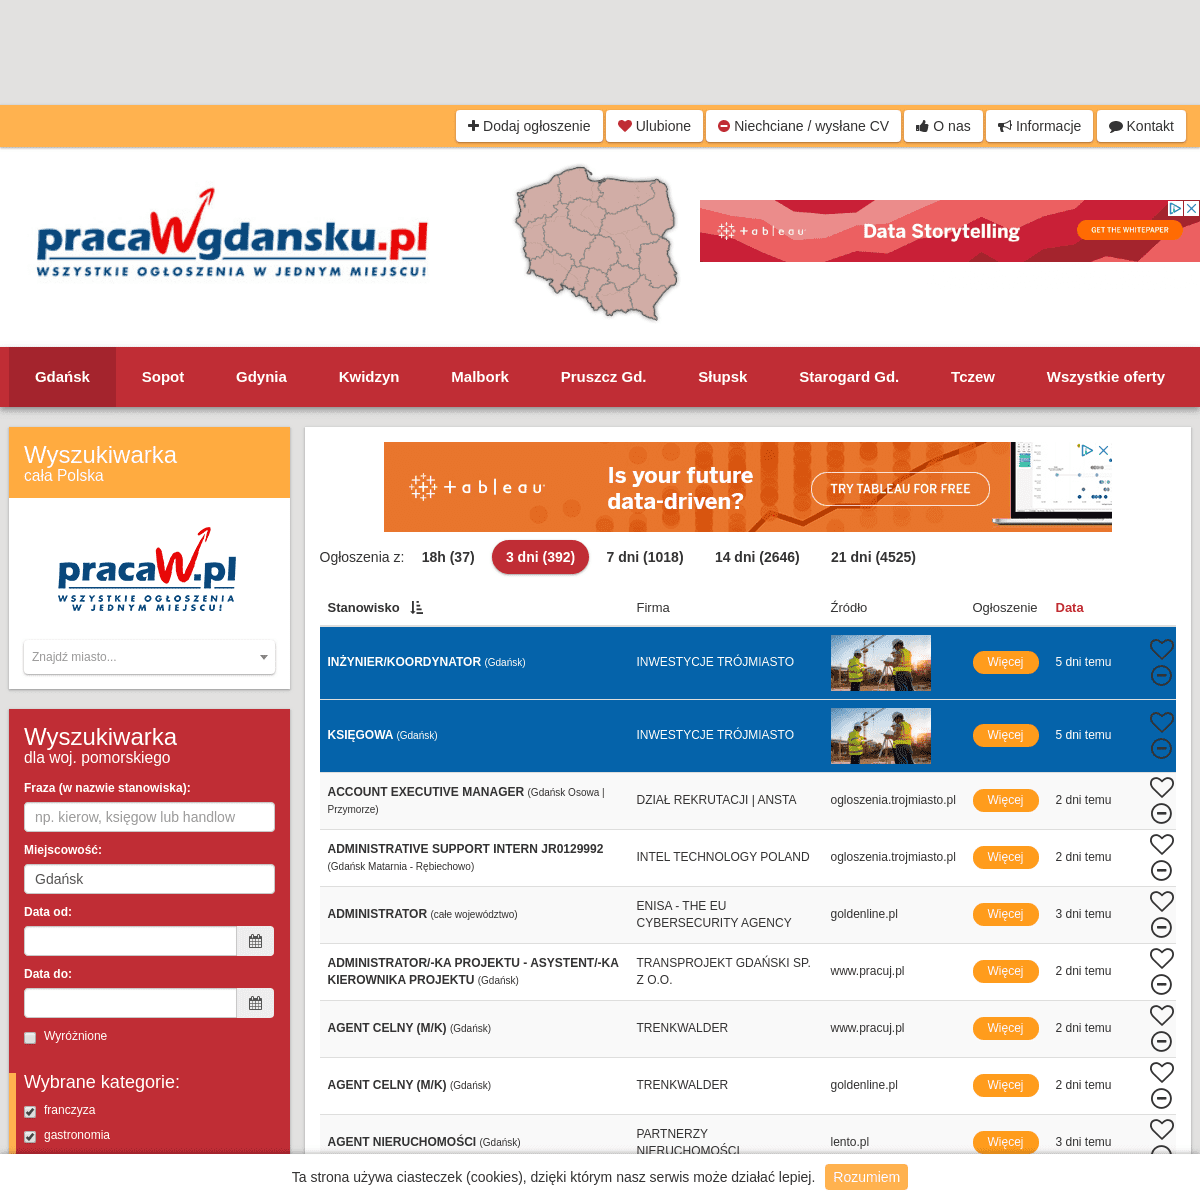 A complete backup of pracawgdansku.com.pl